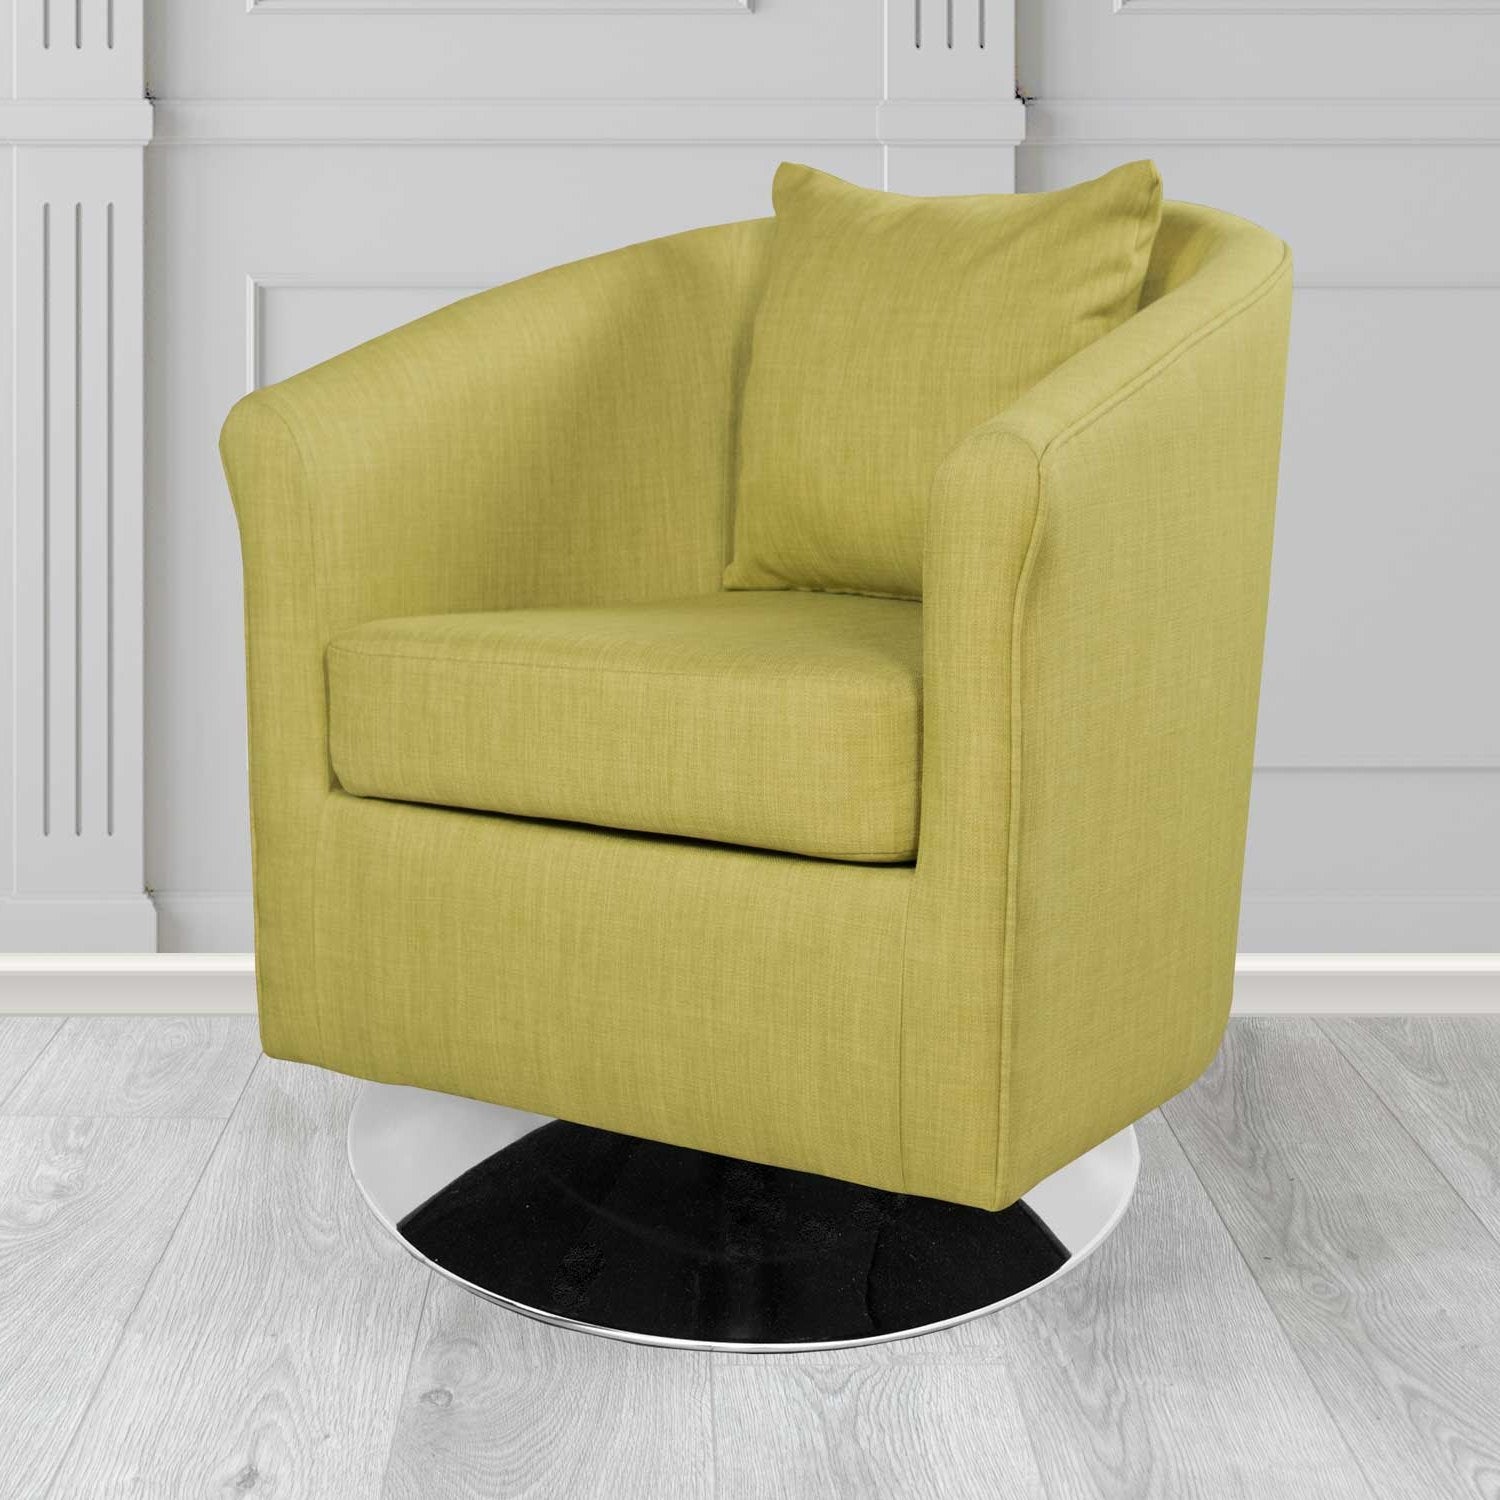 St Tropez Charles Olive Plain Linen Fabric Swivel Tub Chair - The Tub Chair Shop